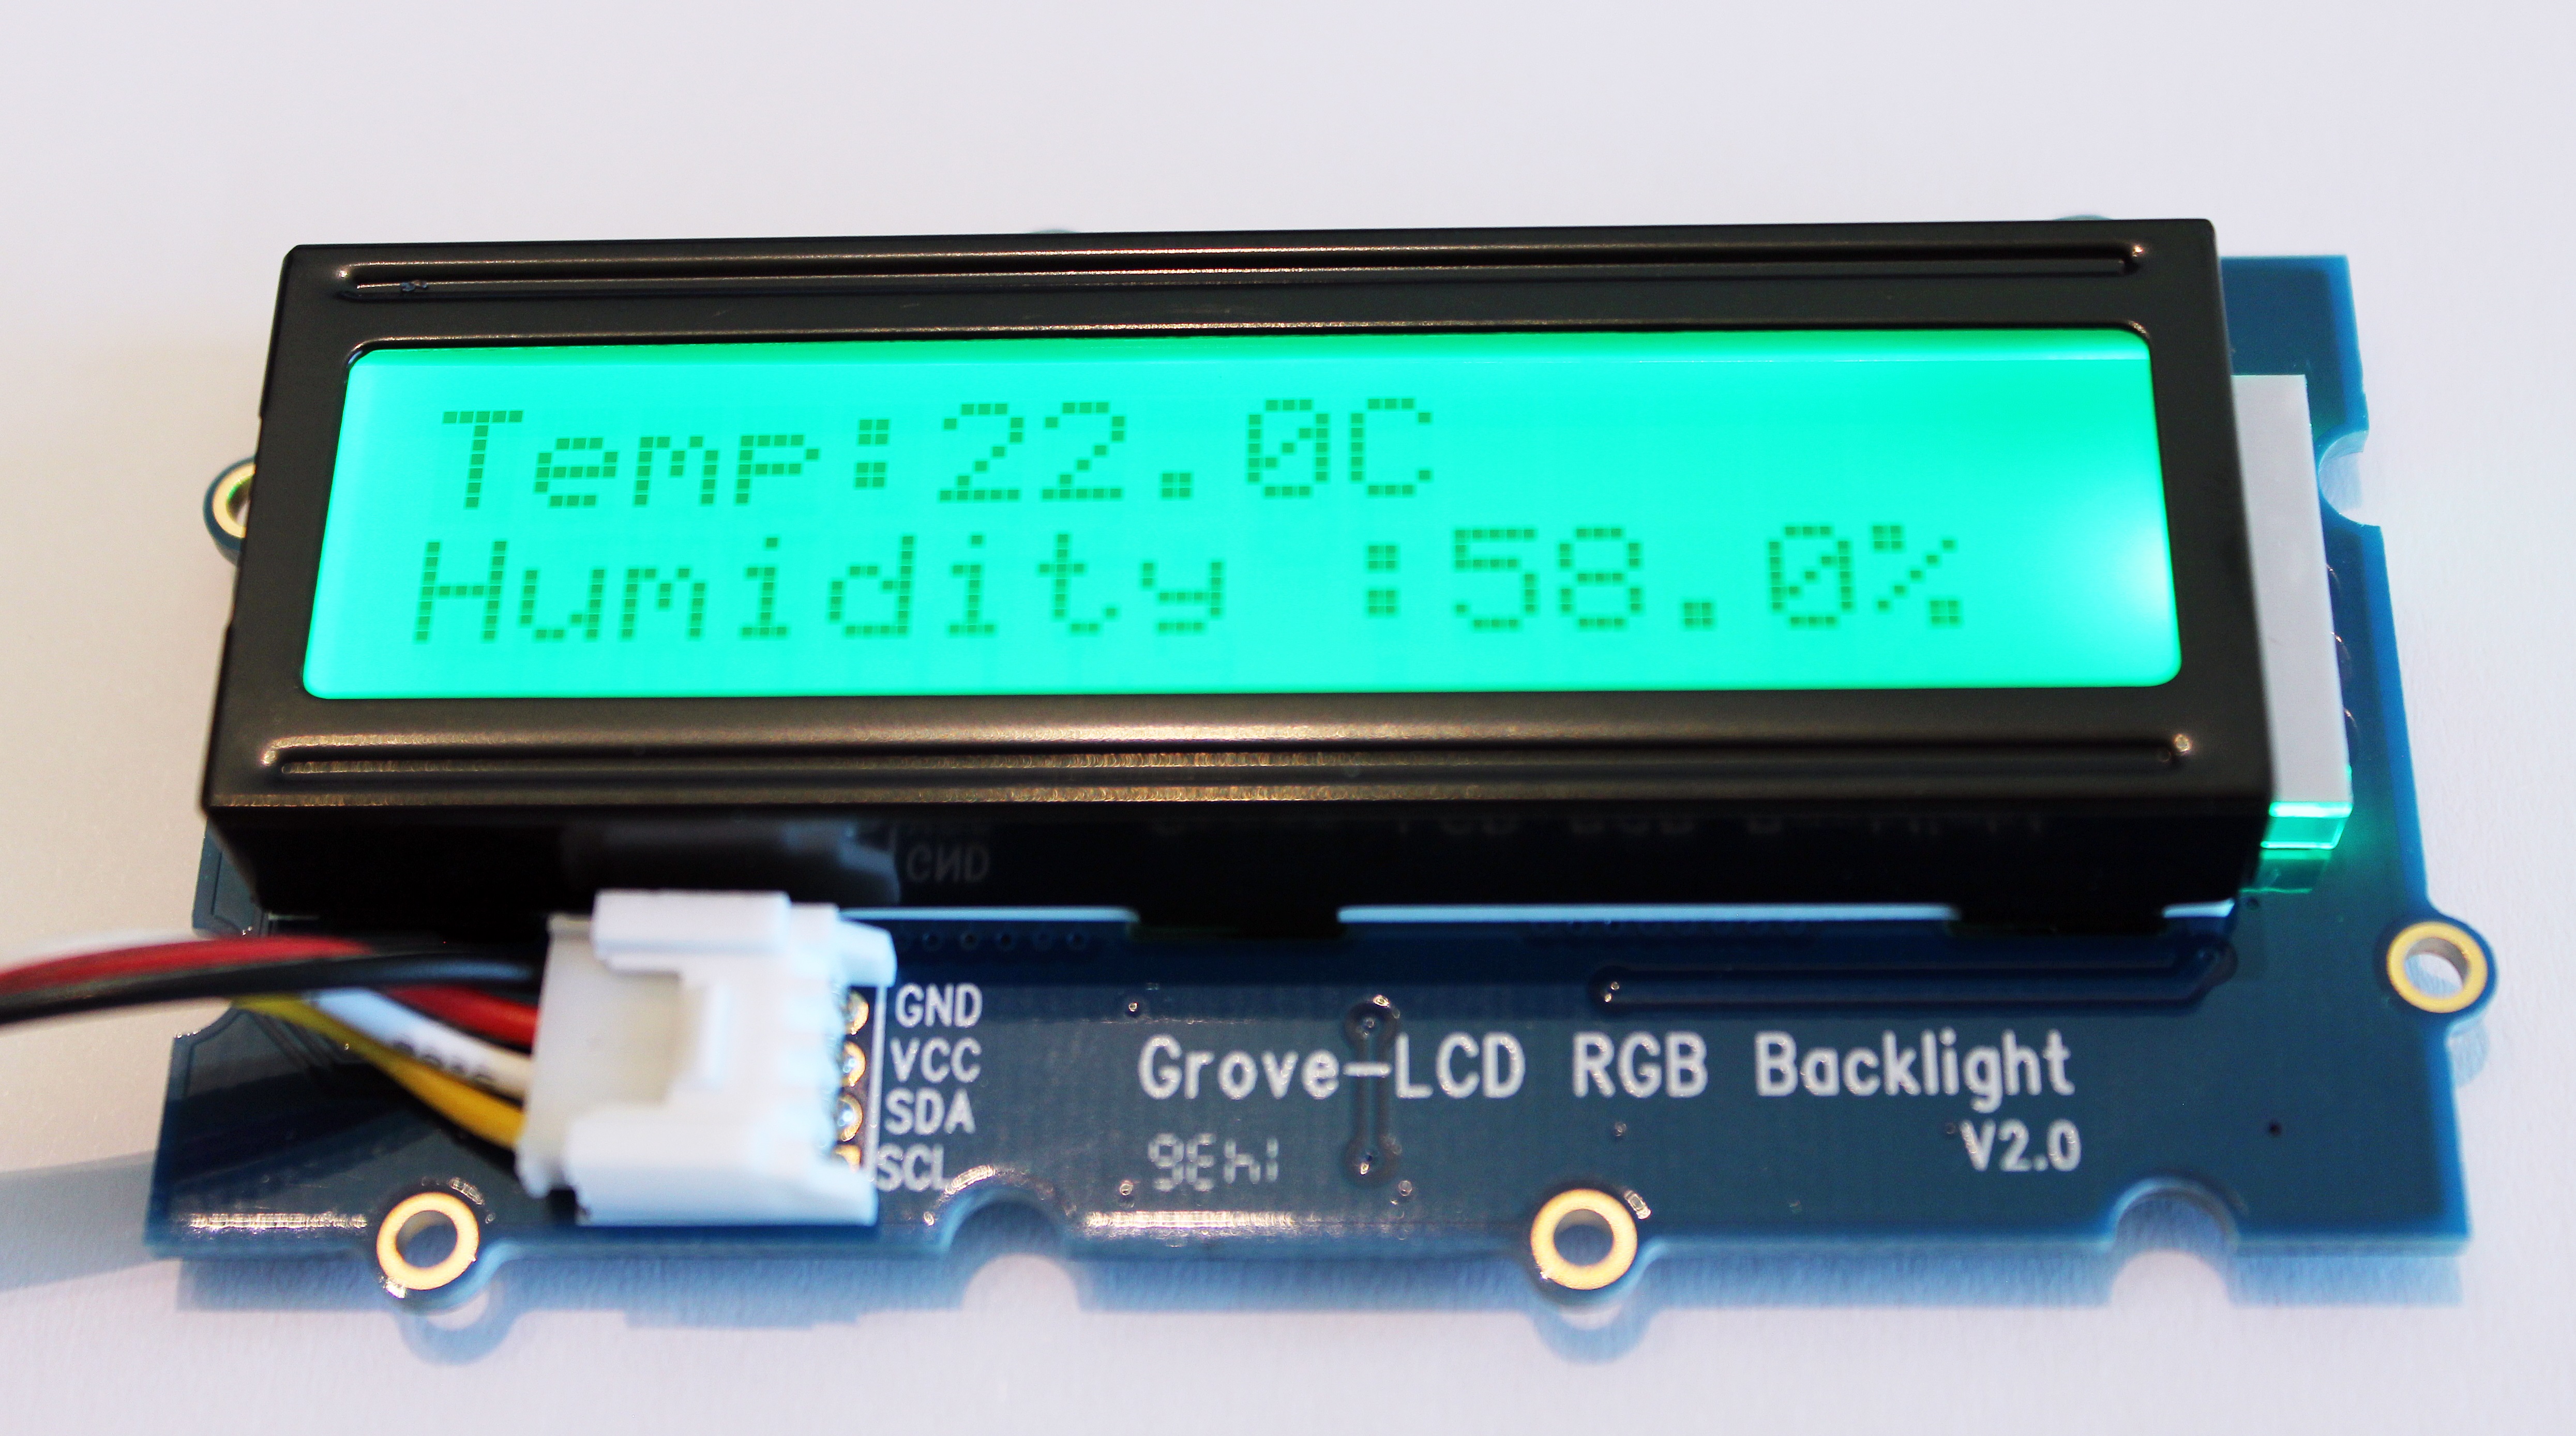 Raspberry Pi Temperature Sensor With Display Example